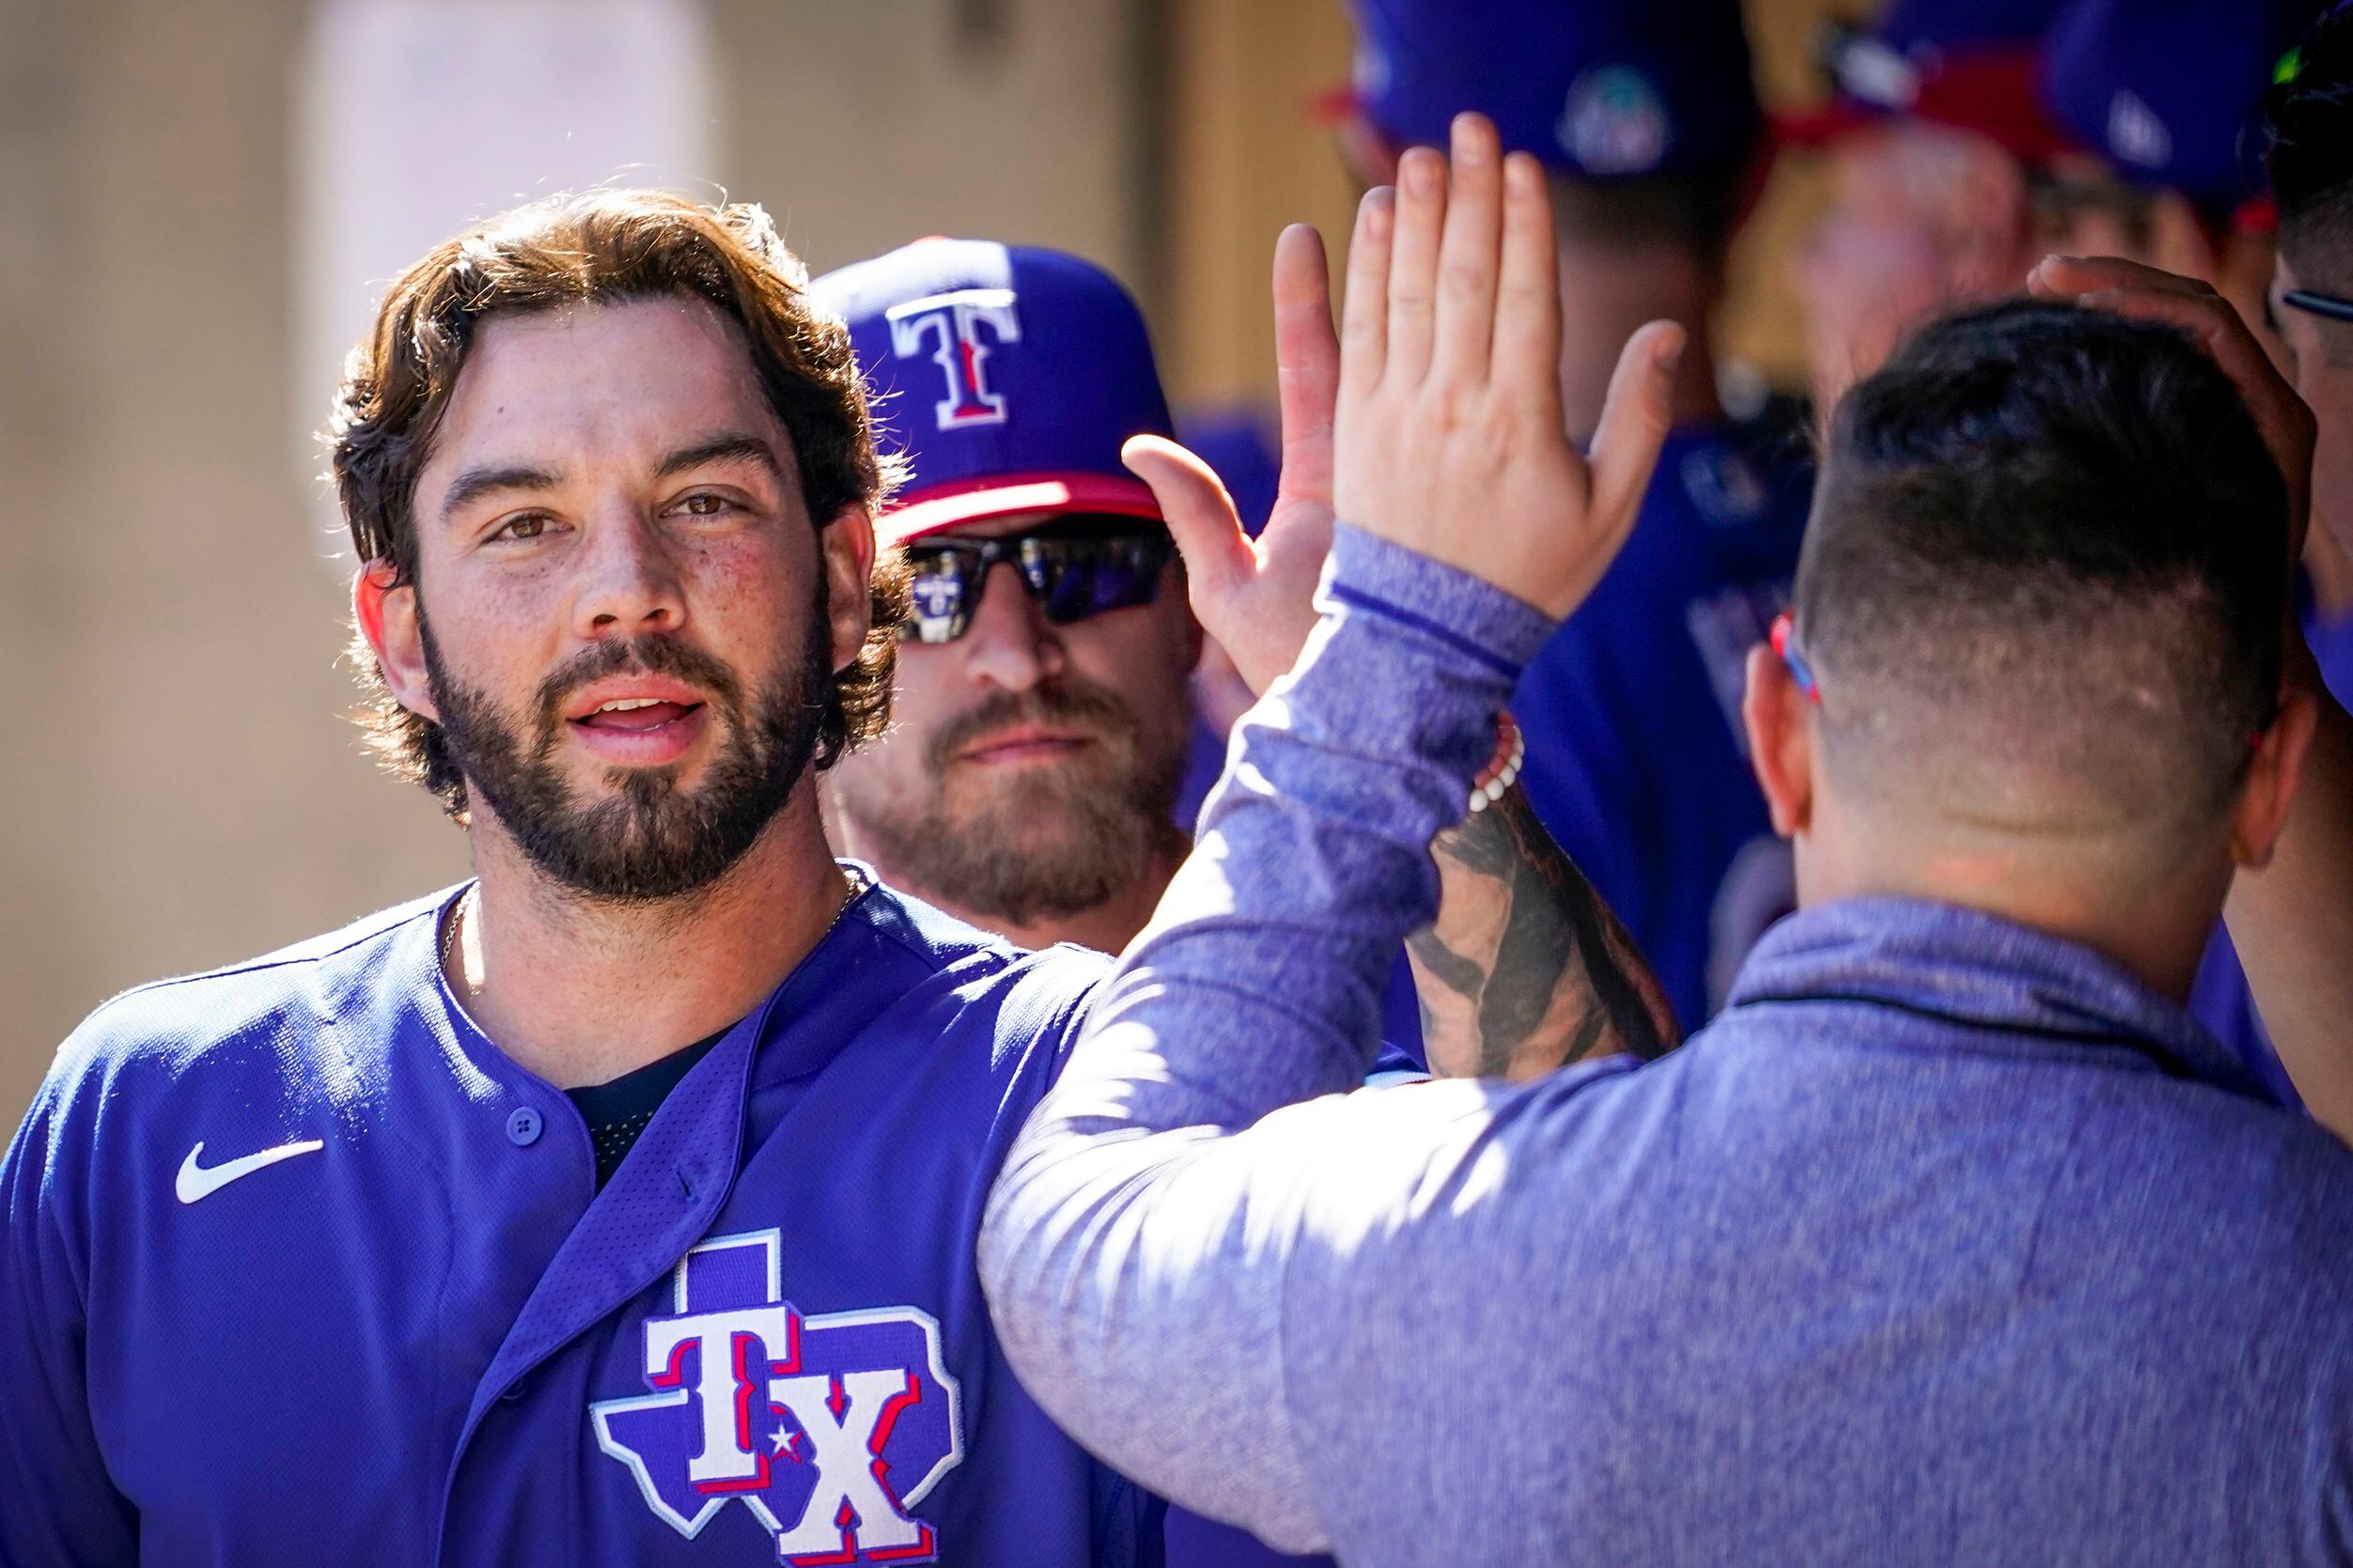 Texas Rangers catcher Blake Swihart celebrates after scoring a run during the third inning...